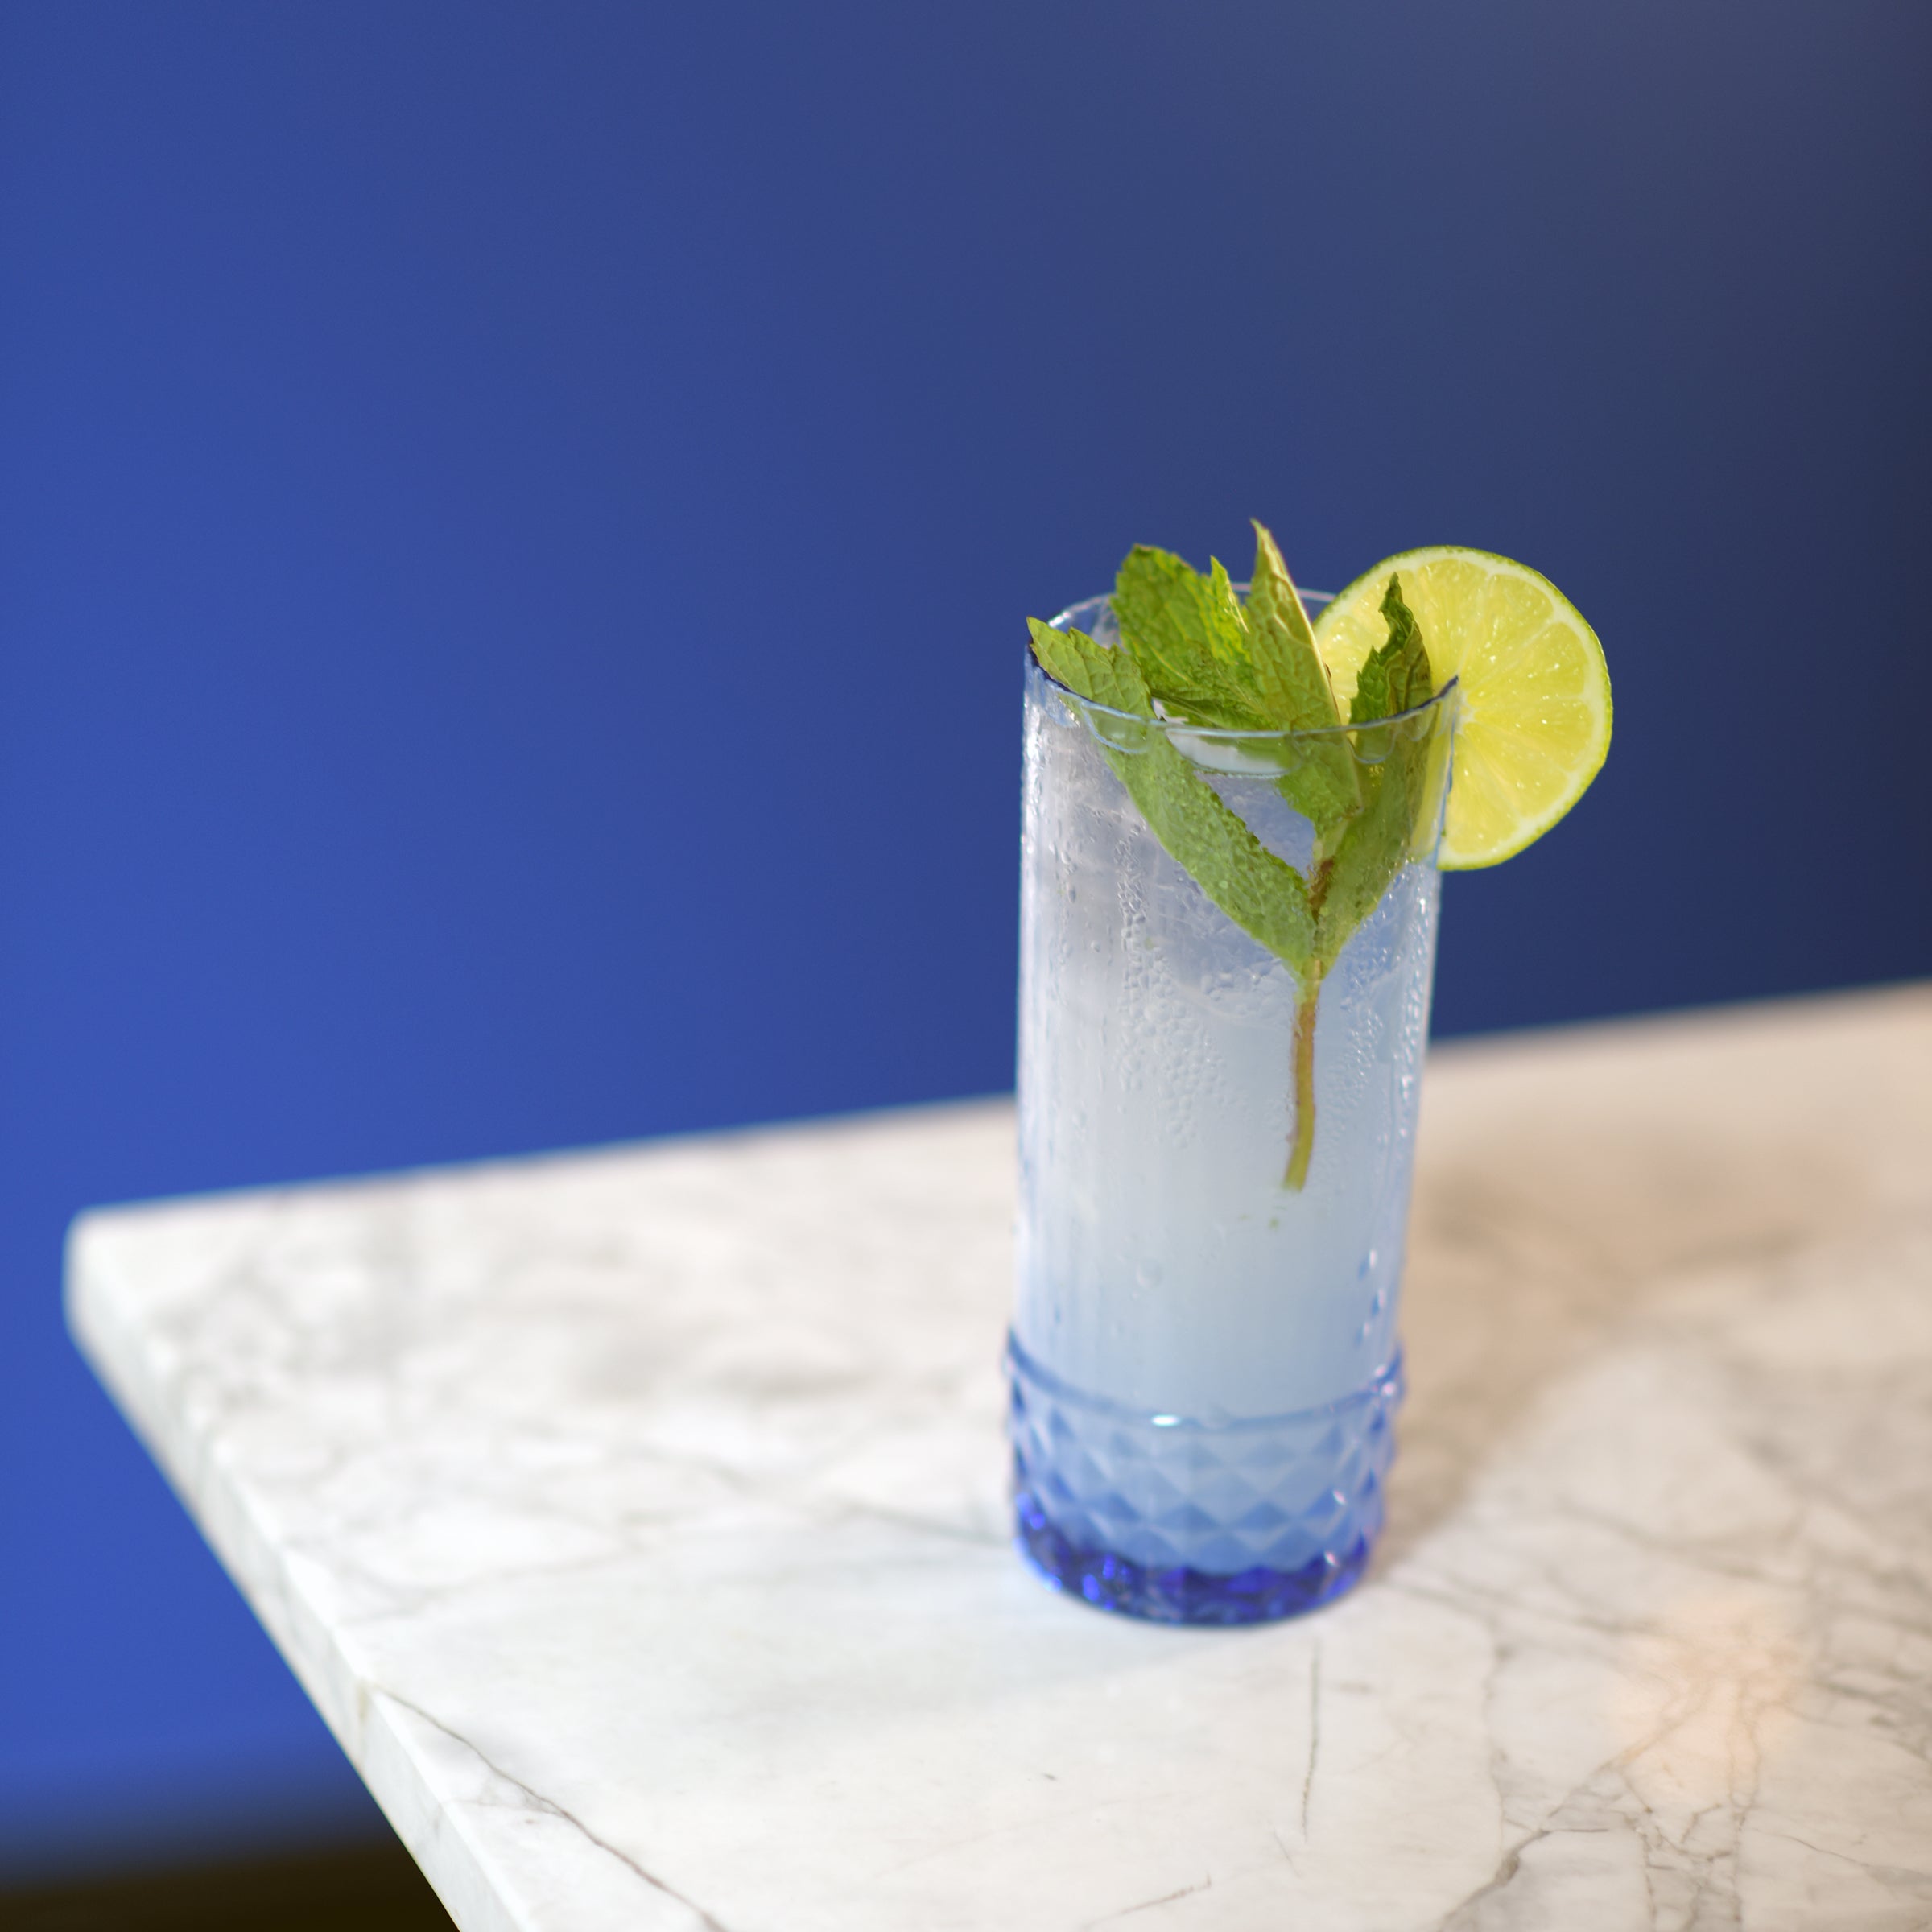 Vintage Blue Glassware – Libby – Star Sapphire – Duz Detergent Promo  Goblets – Set of 8 – It's Bazaar on 21st Street